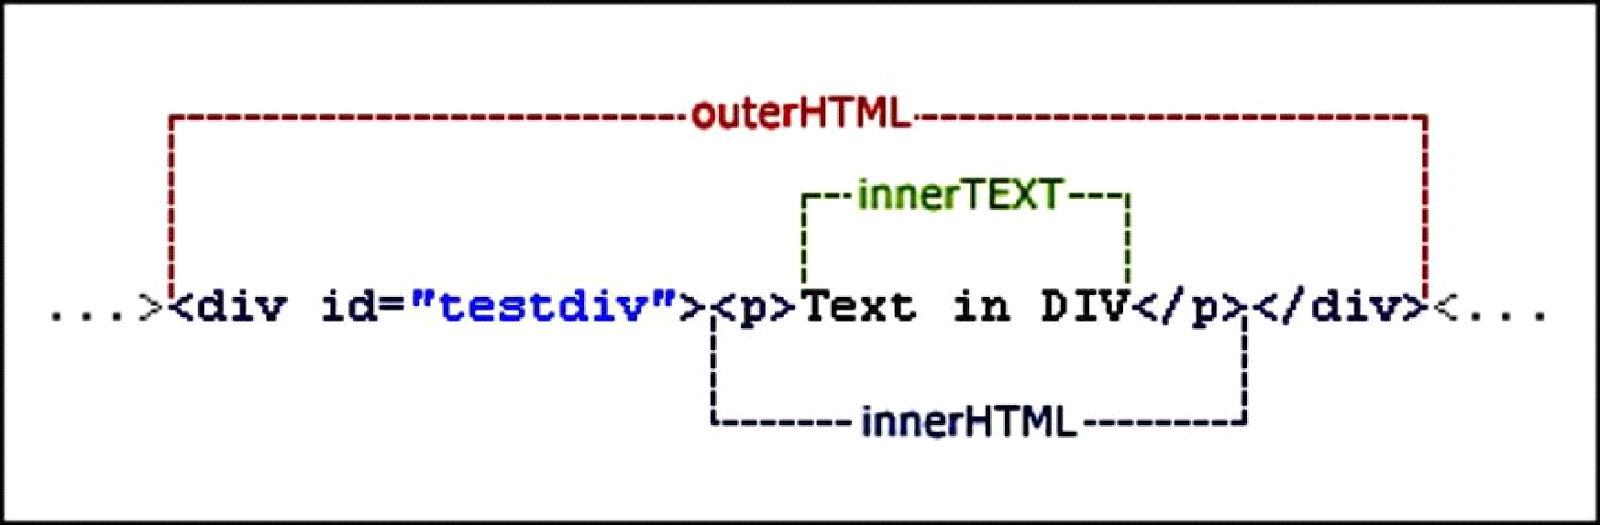 Image describing ```innerHTML```, ```outerHTML```, and ```innerText```